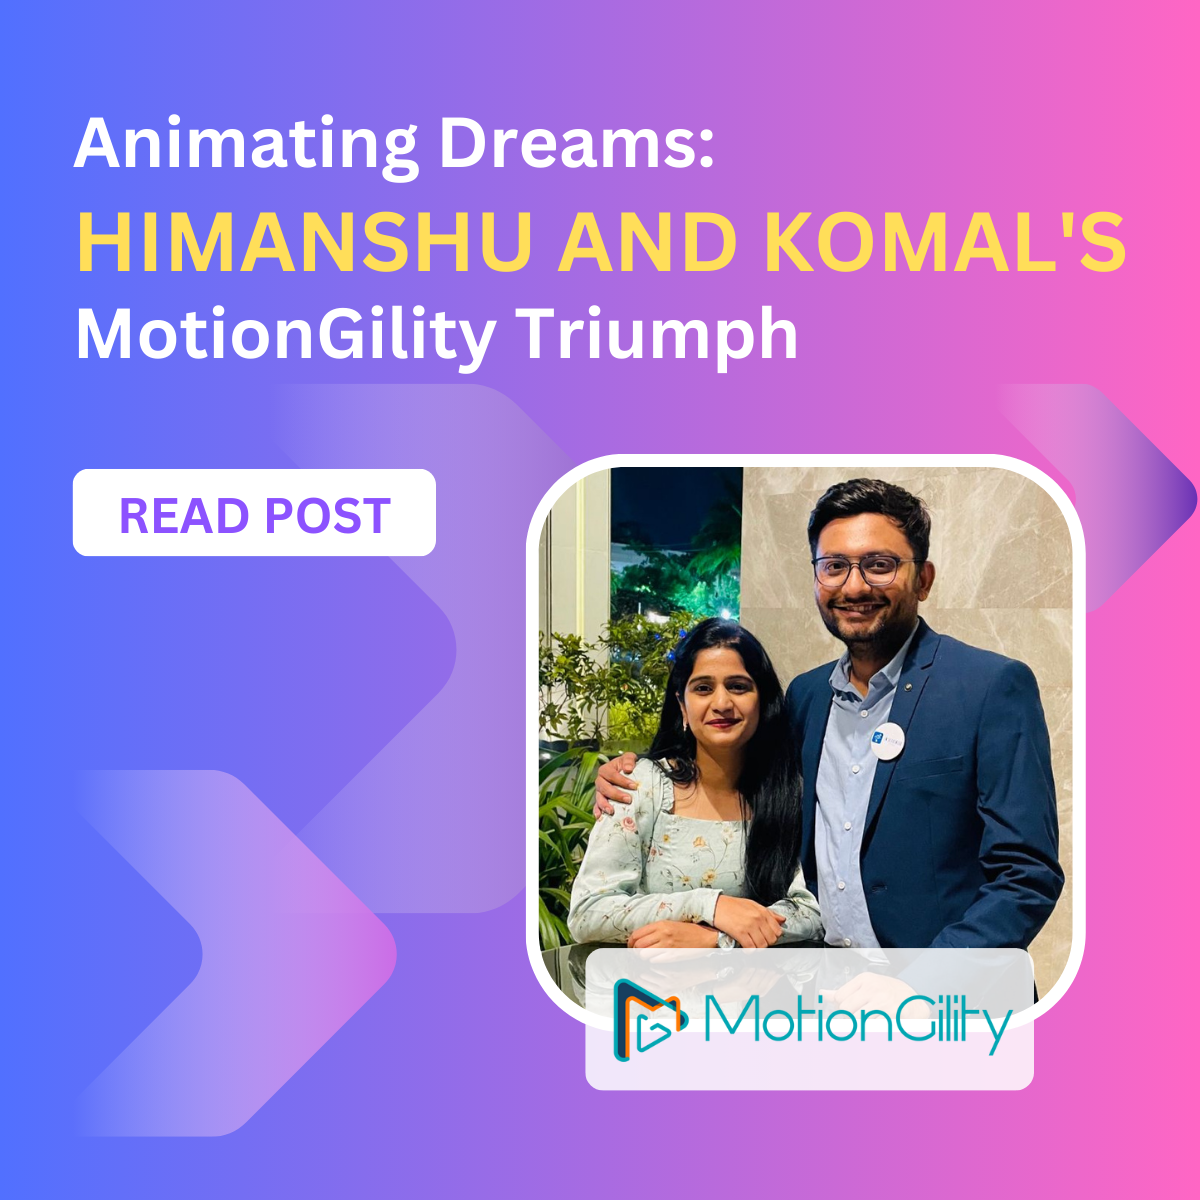 Animating Dreams: MotionGility Triumph